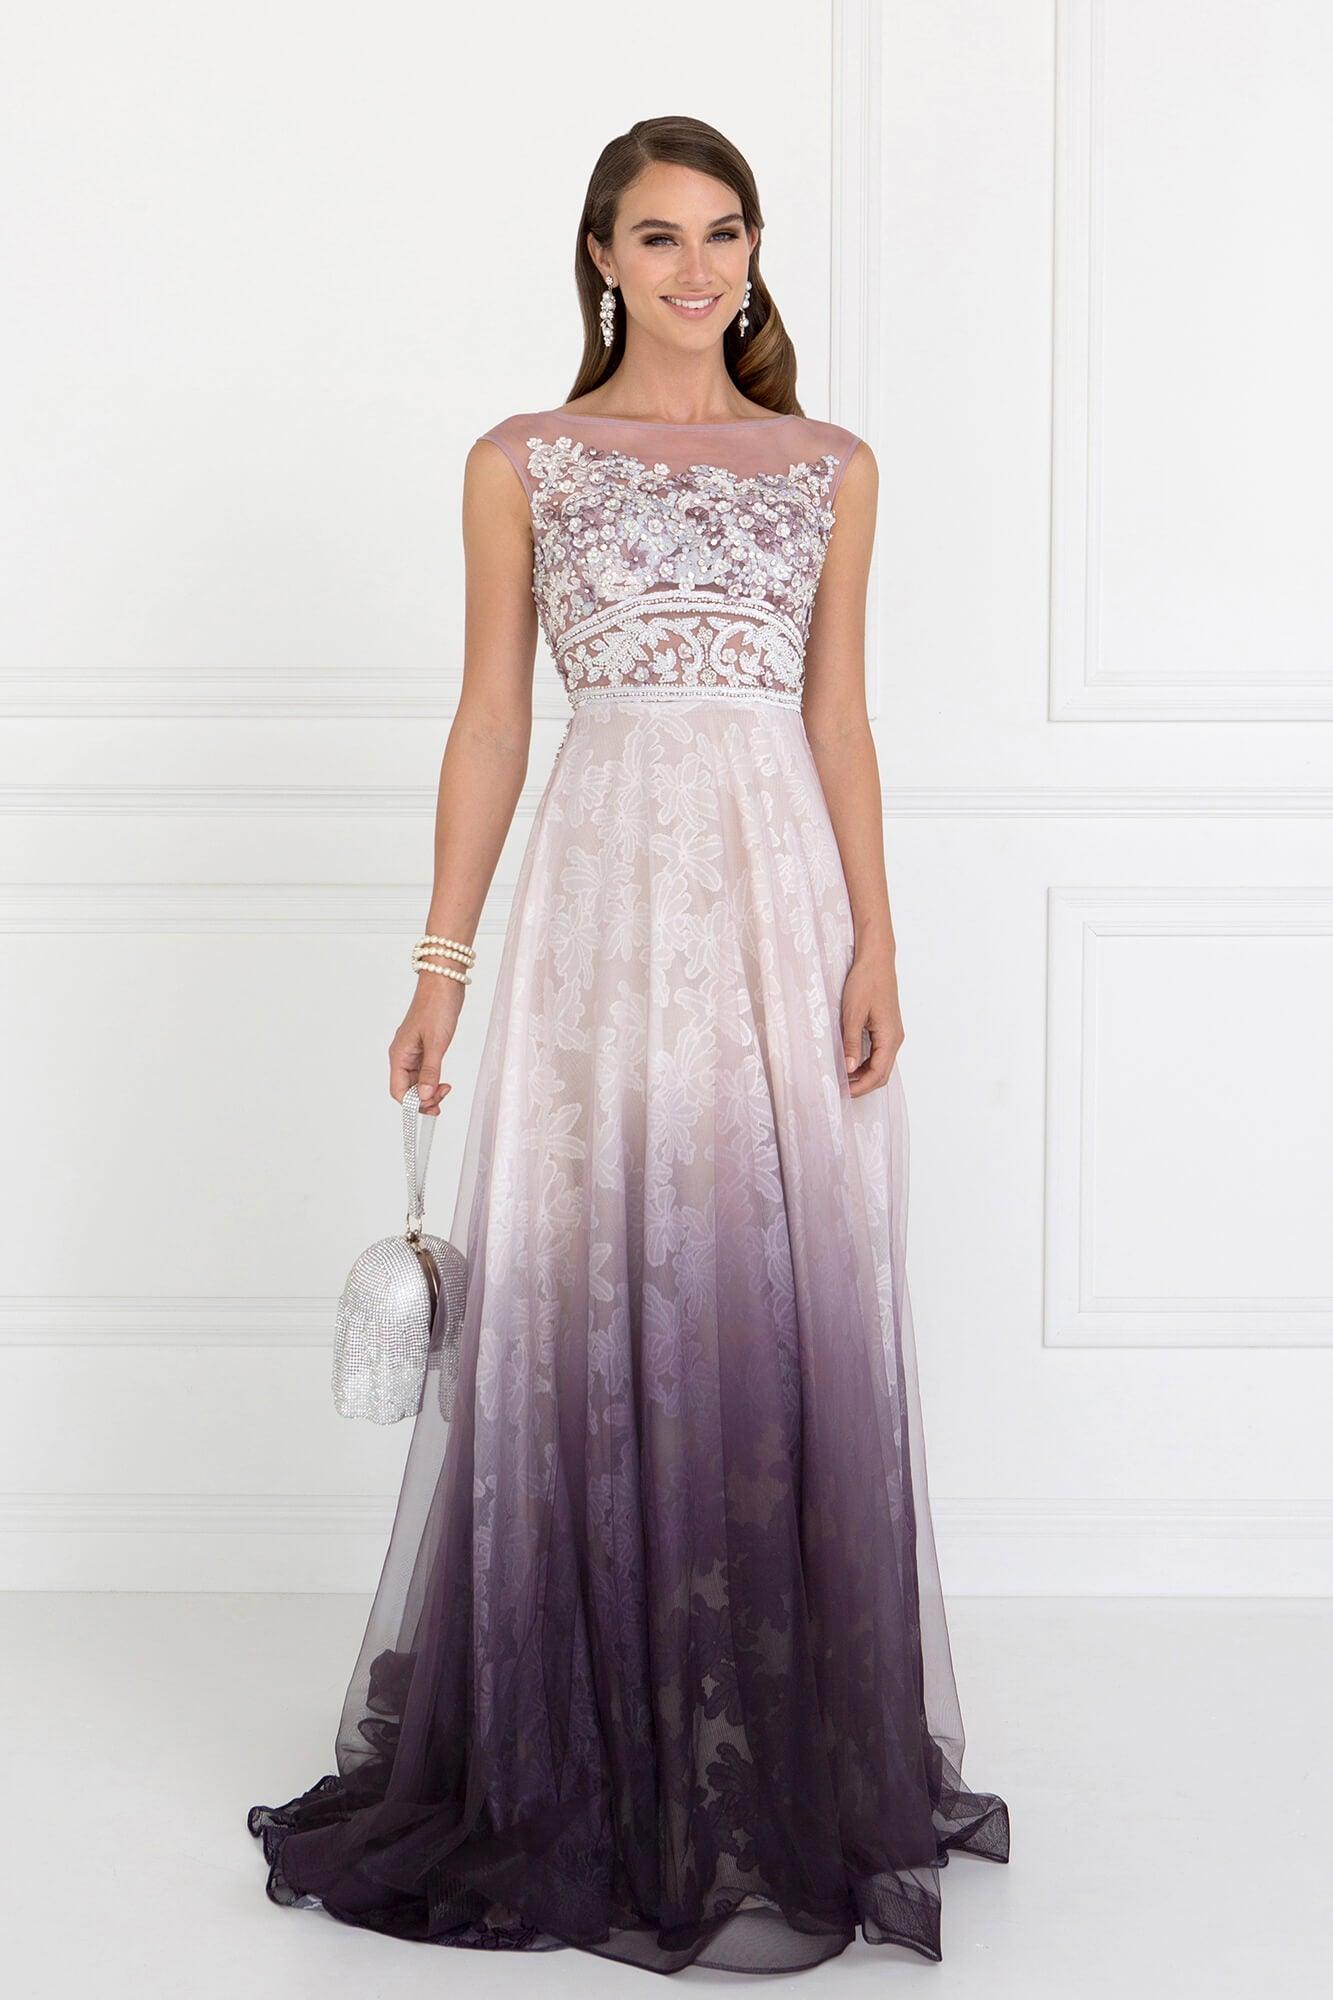 Prom Long Cap Sleeve Floral Lace Evening Formal Dress - The Dress Outlet Elizabeth K